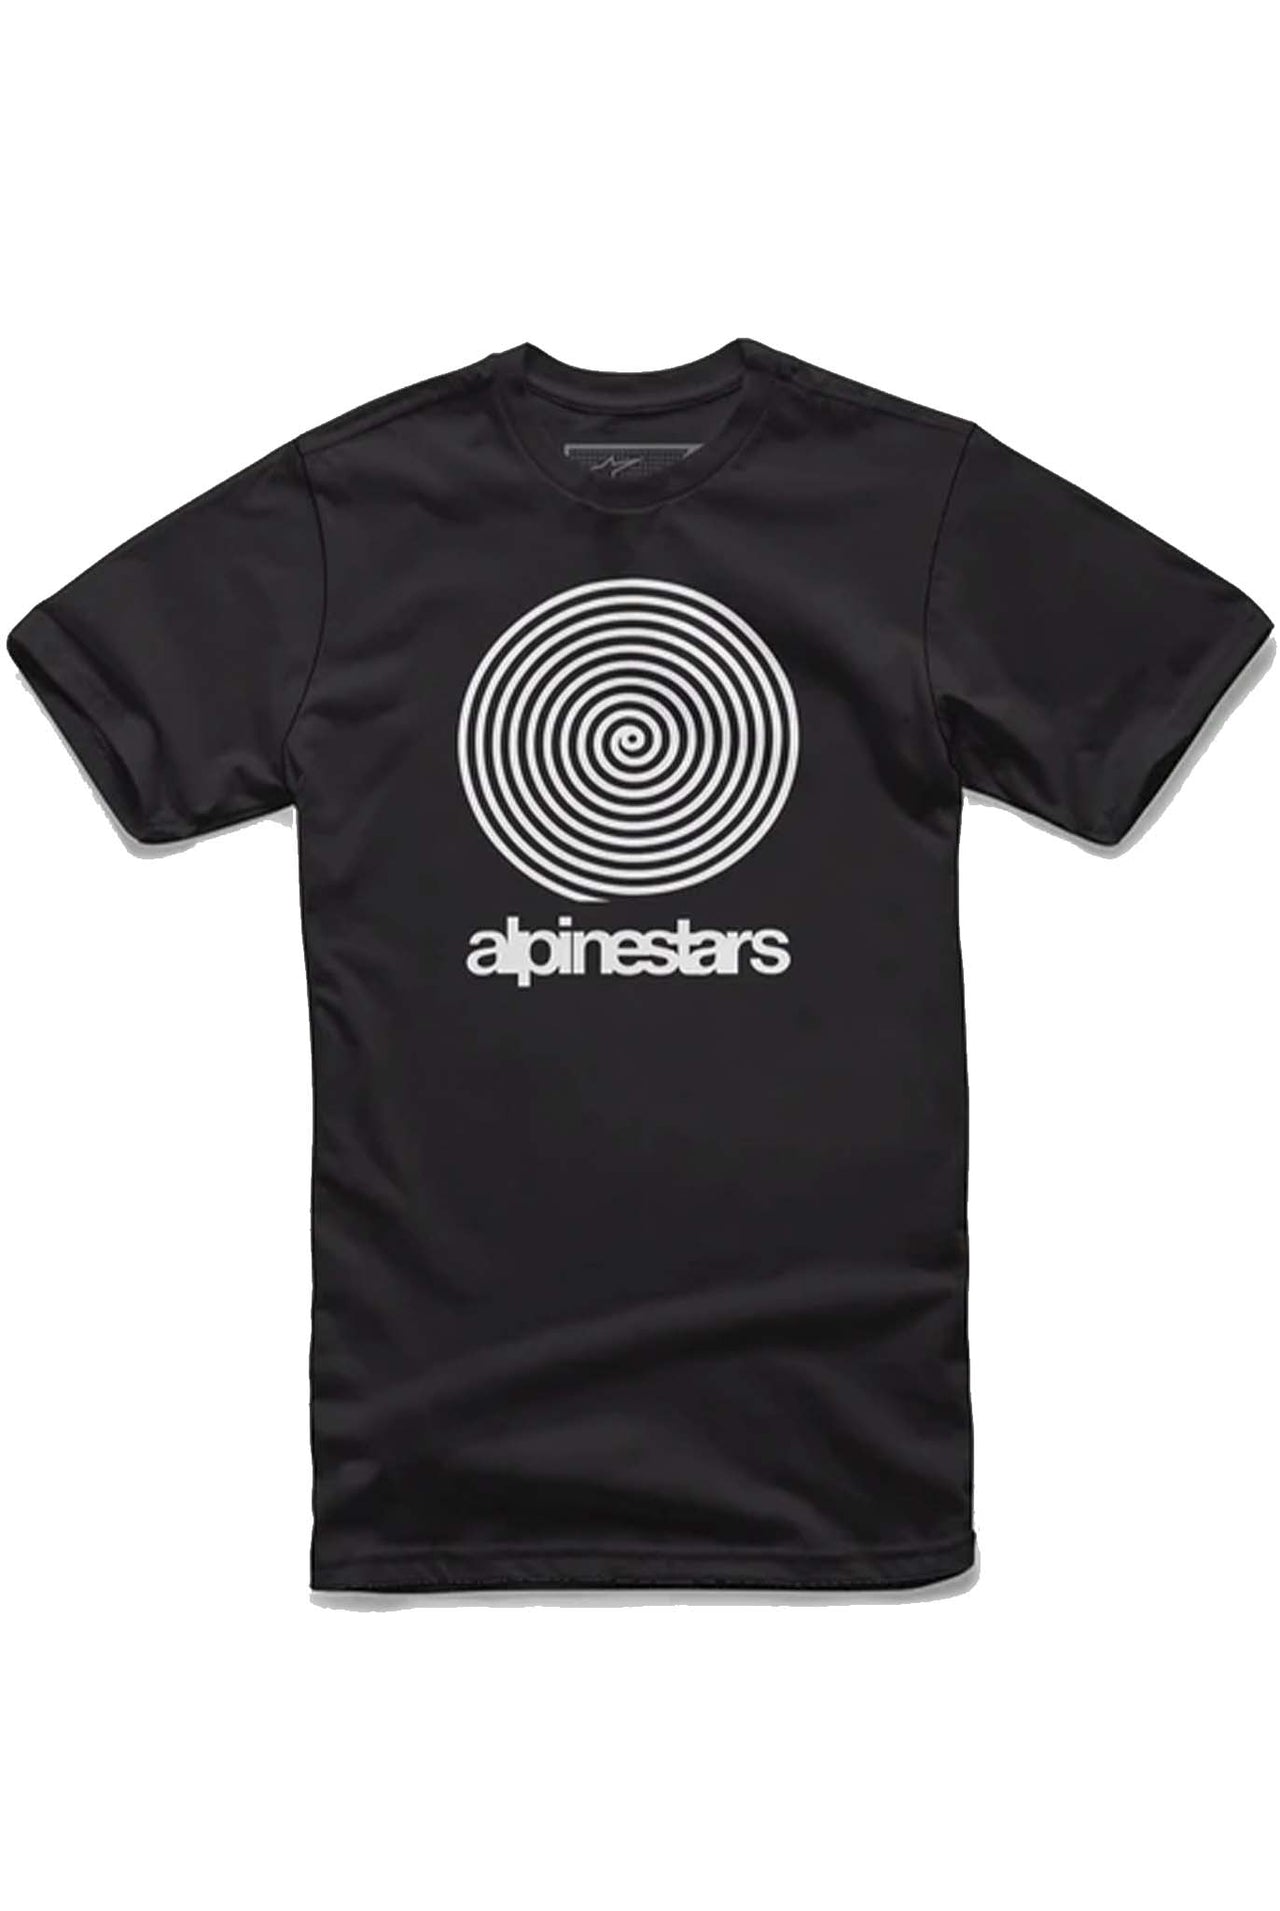 Camiseta Alpinestars Real Spiral black/white